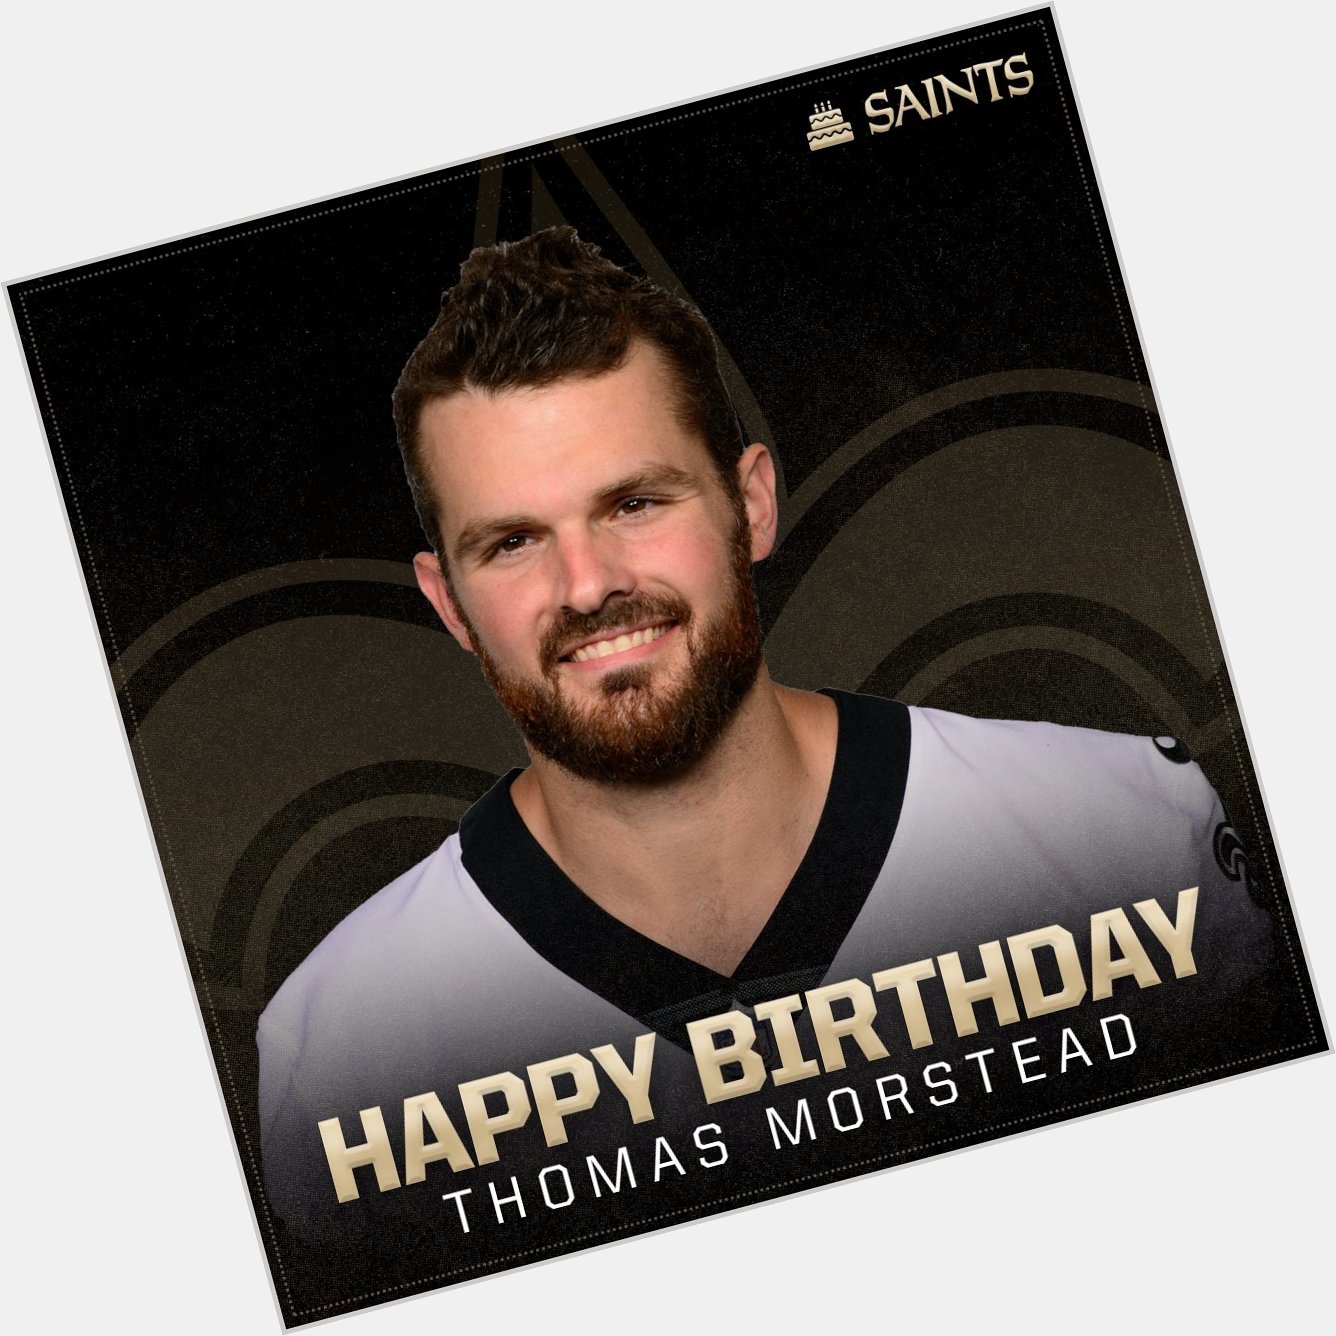 Remessage to wish Thomas Morstead a happy birthday! 